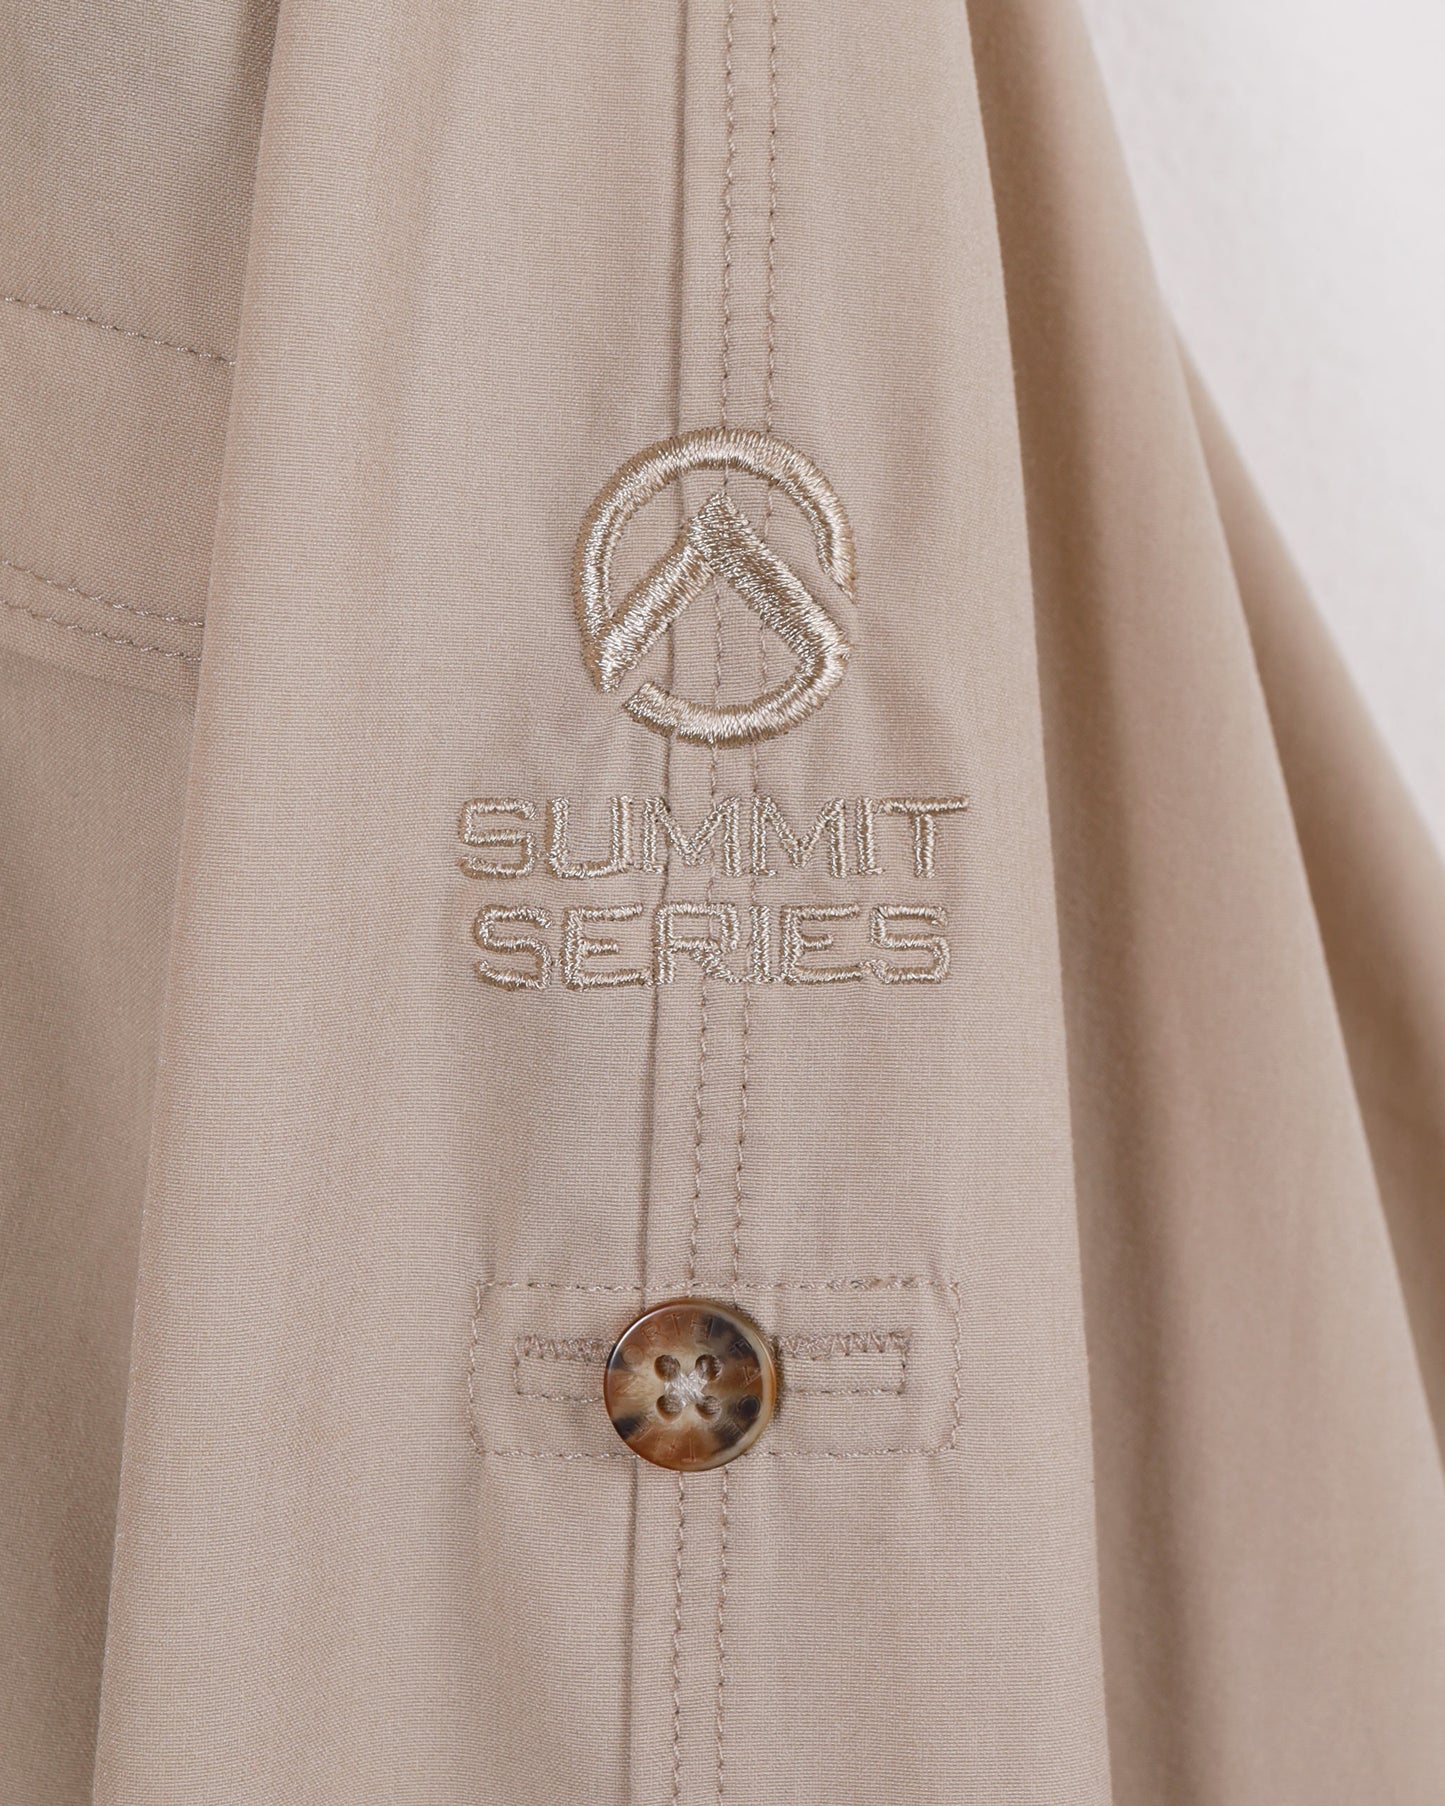 The North Face Summit Series Button Up Nylon Beige Lightweight Shirt Jacket XXL